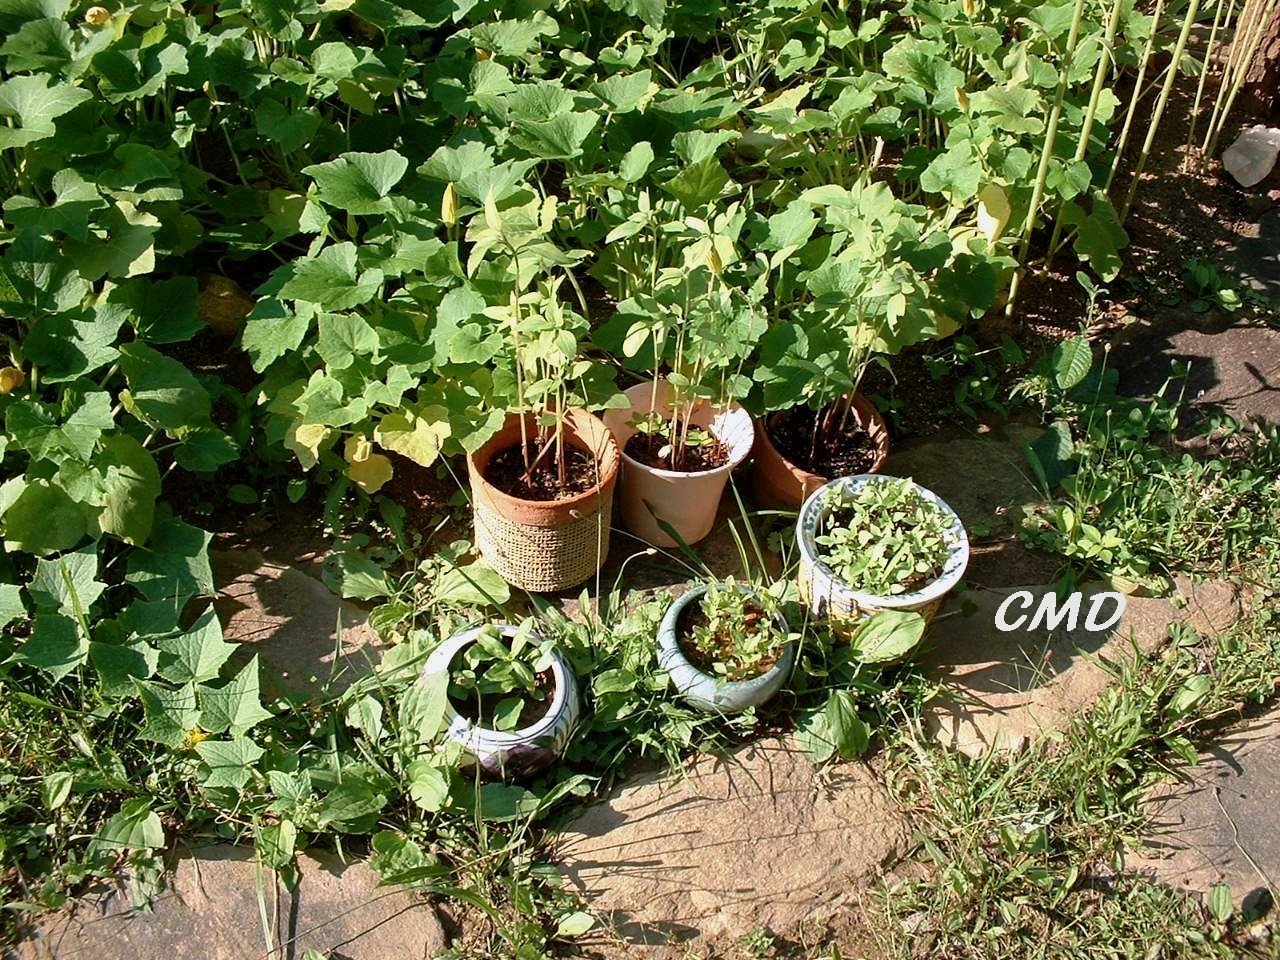 Farming Garden Organic Herbs pots planter fertilizer Basil Oregano Photograph by Colette Dowell for Economic Stimulus Recovery